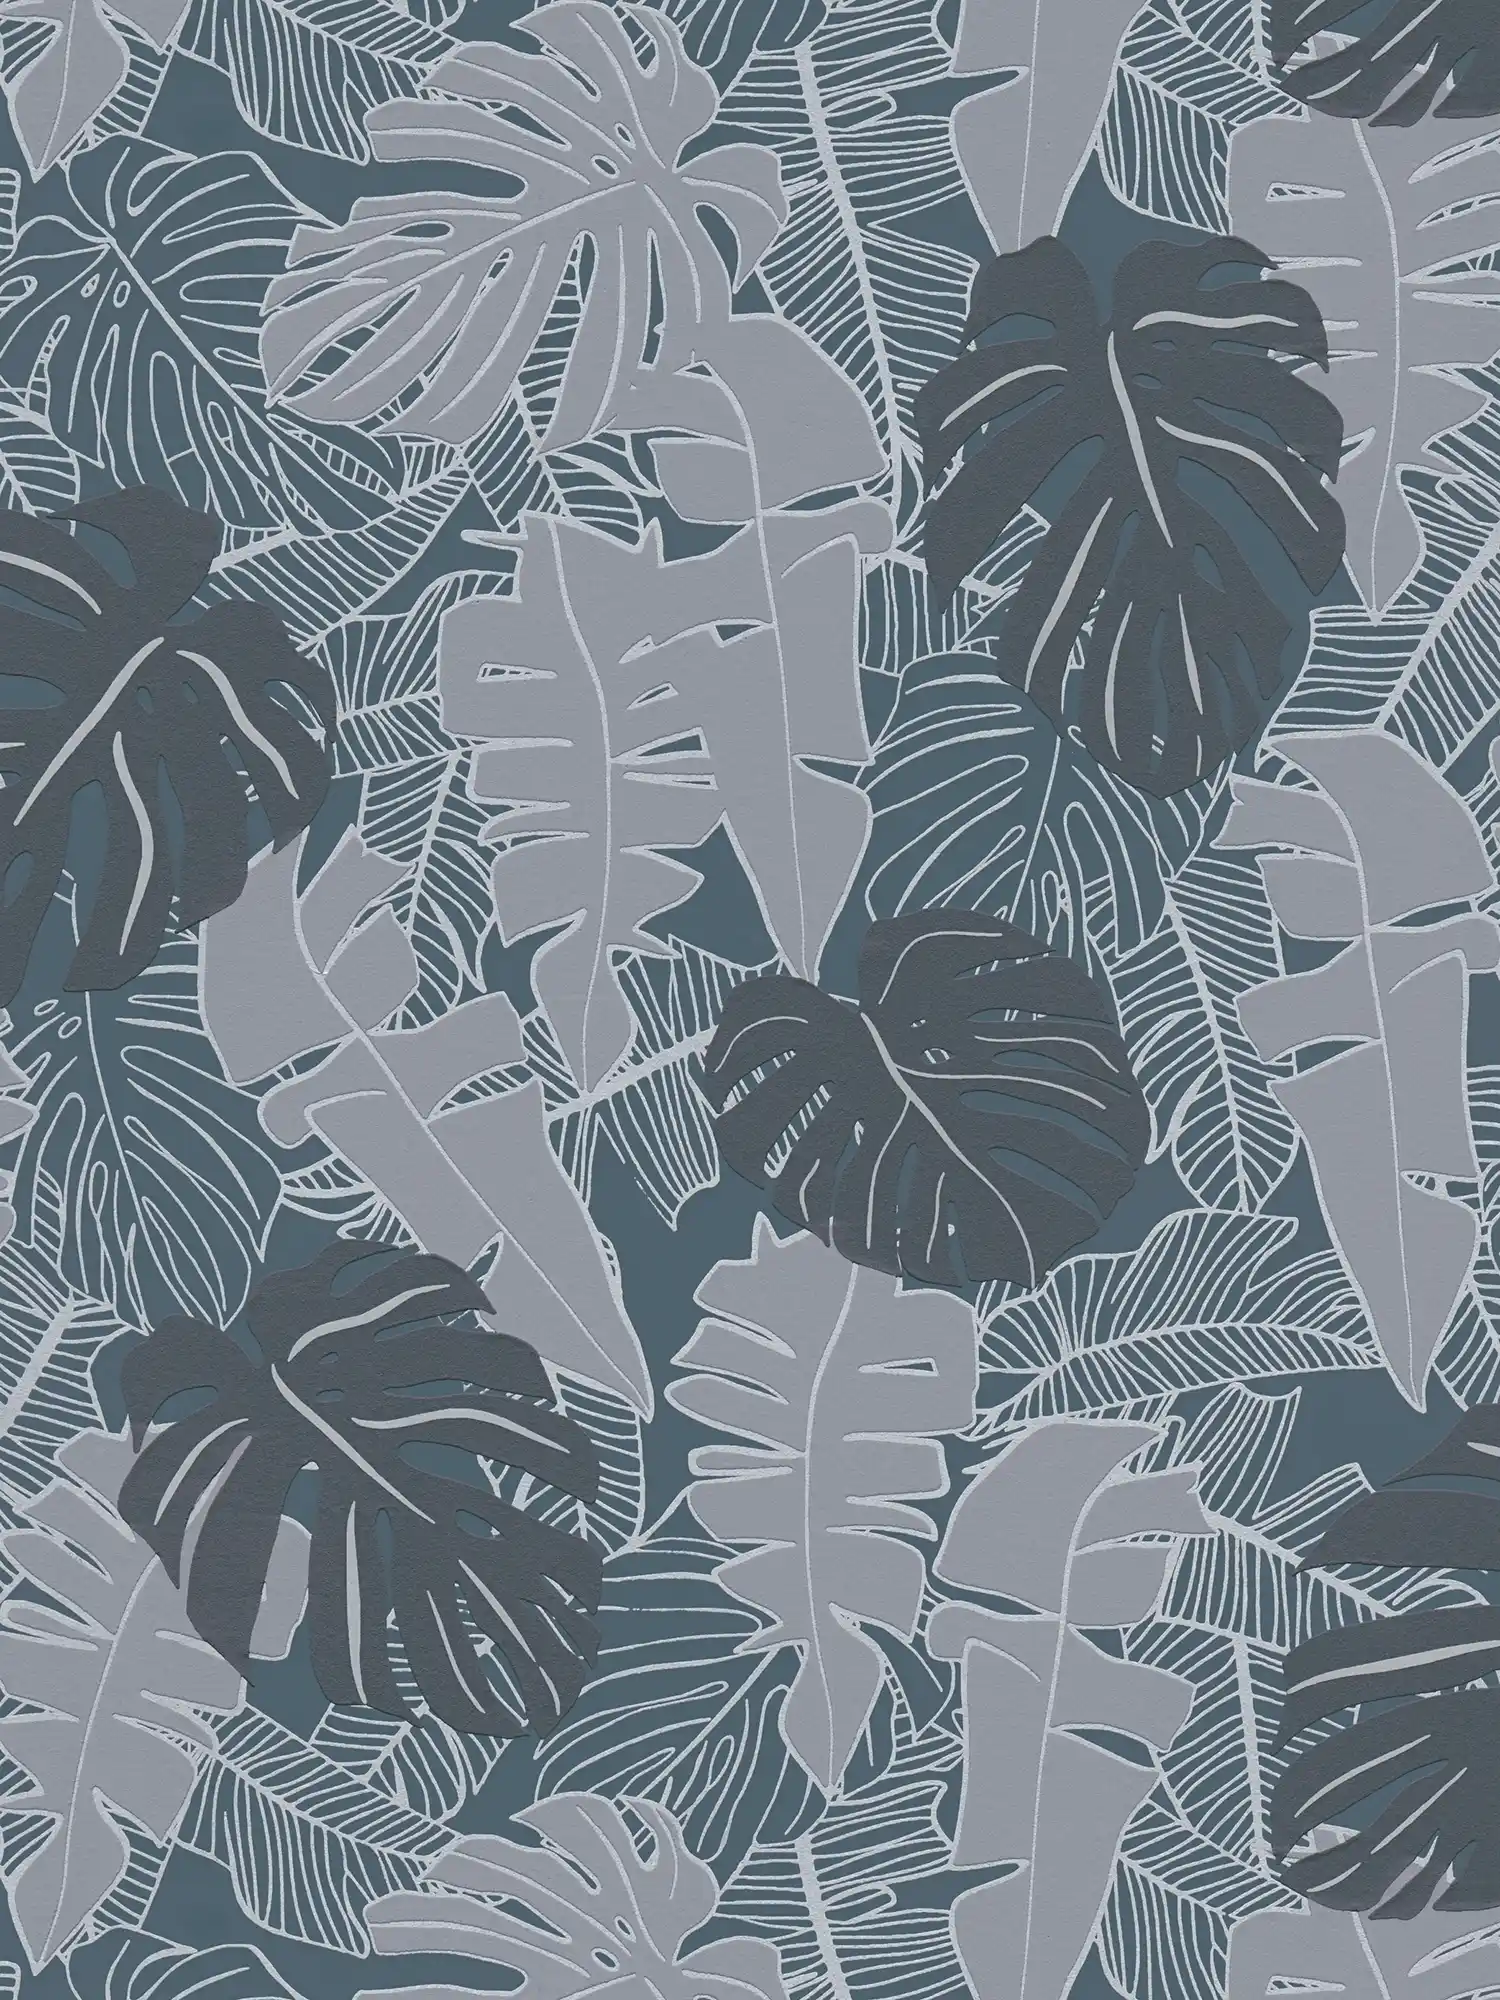 Papier peint motif jungle avec feuilles de bananier & effet métallisé - noir, gris
